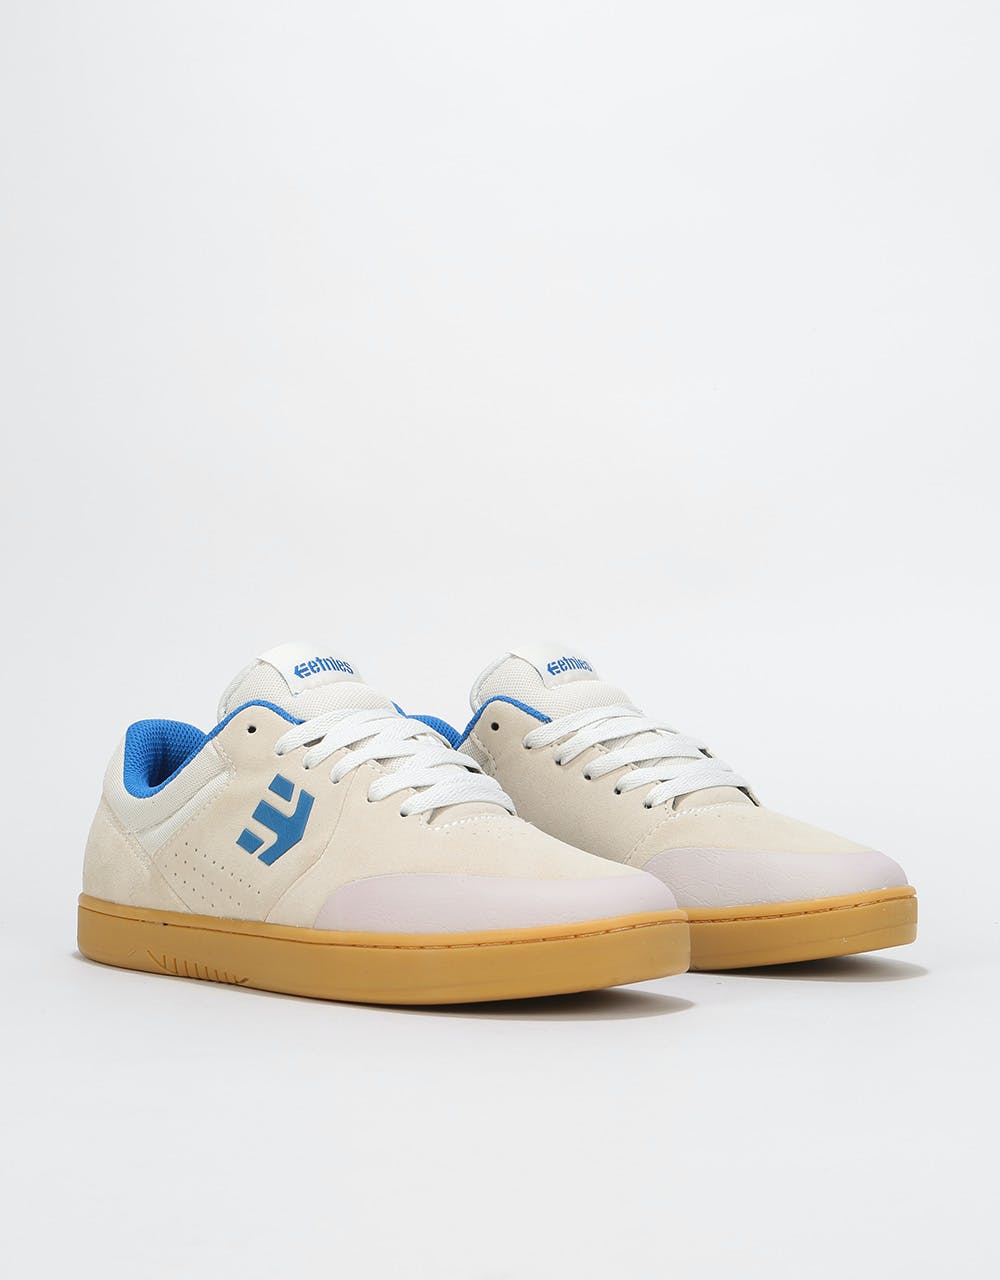 Etnies x Michelin Marana Skate Shoes - White/Blue/Gum